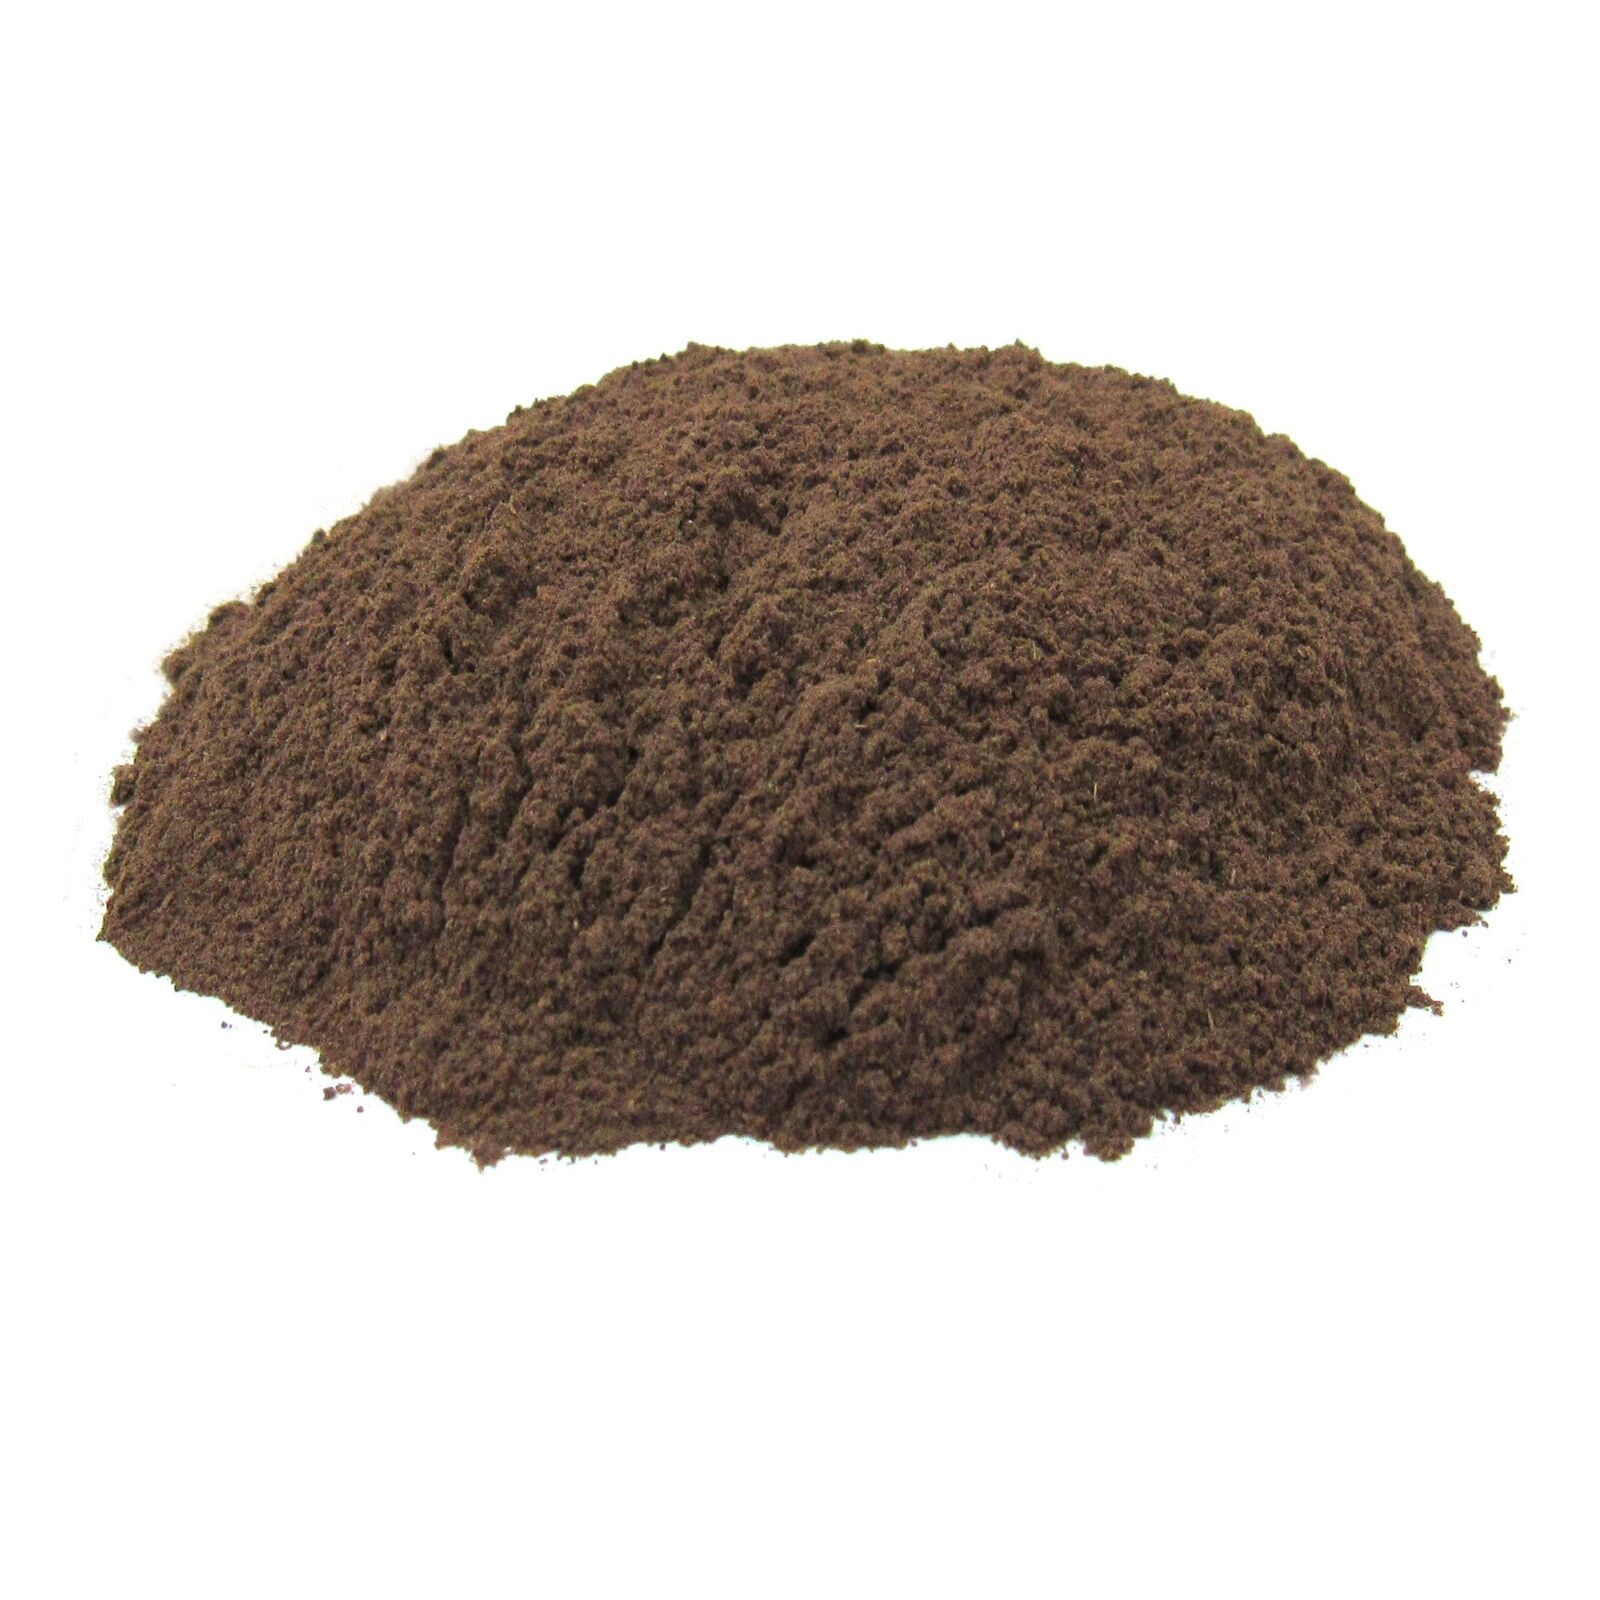 Black Cohosh Root Powder (1 oz) - Fine Ground Ritual Herb